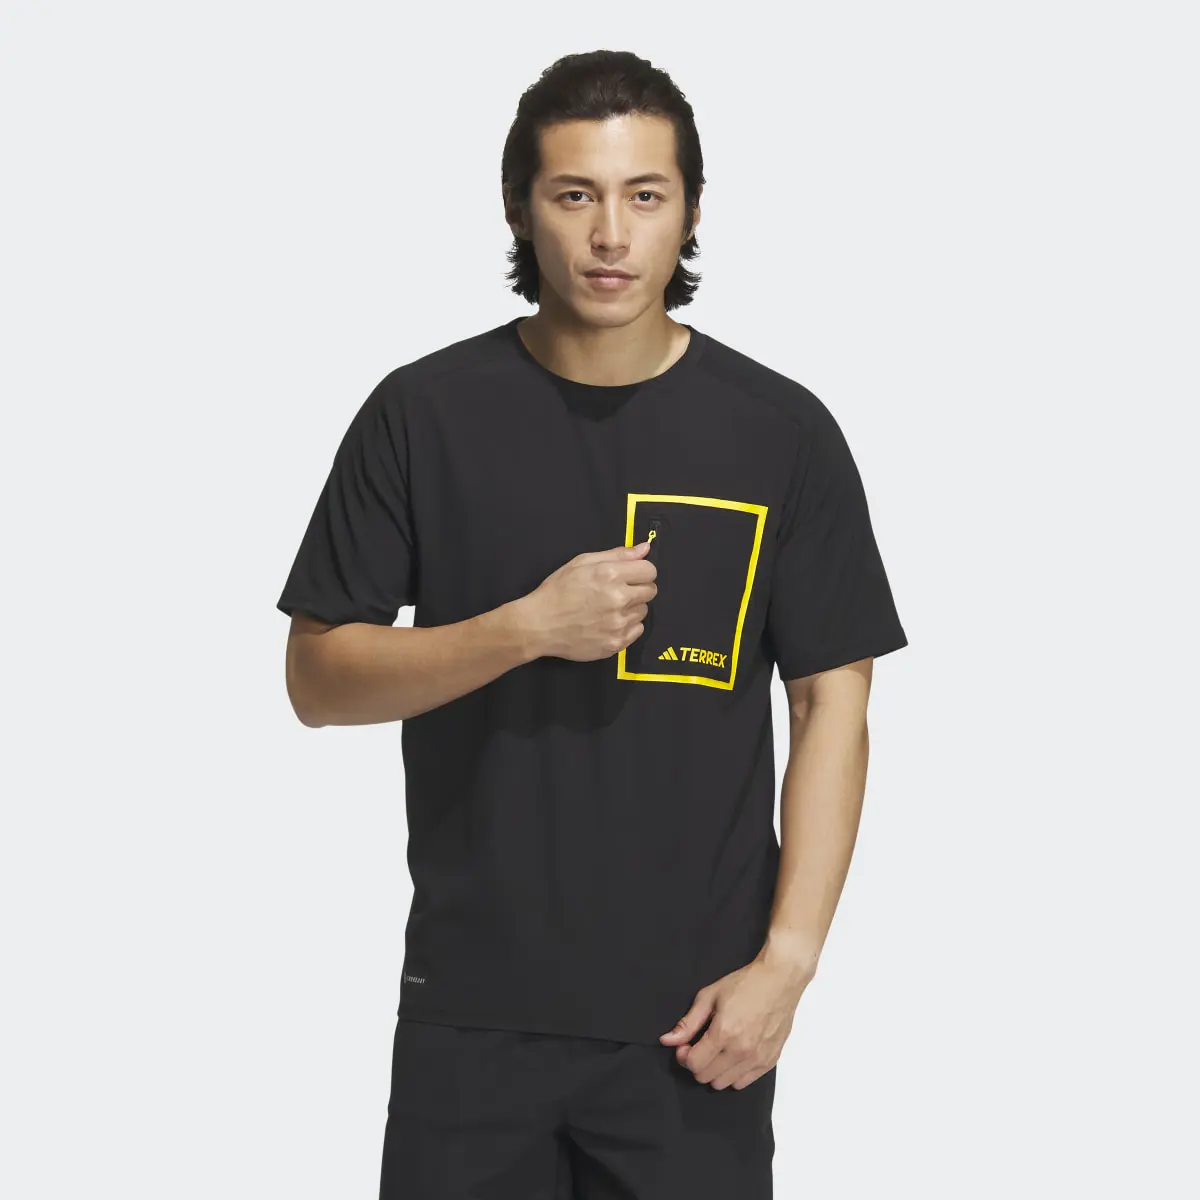 Adidas T-shirt National Geographic Short Sleeve. 2